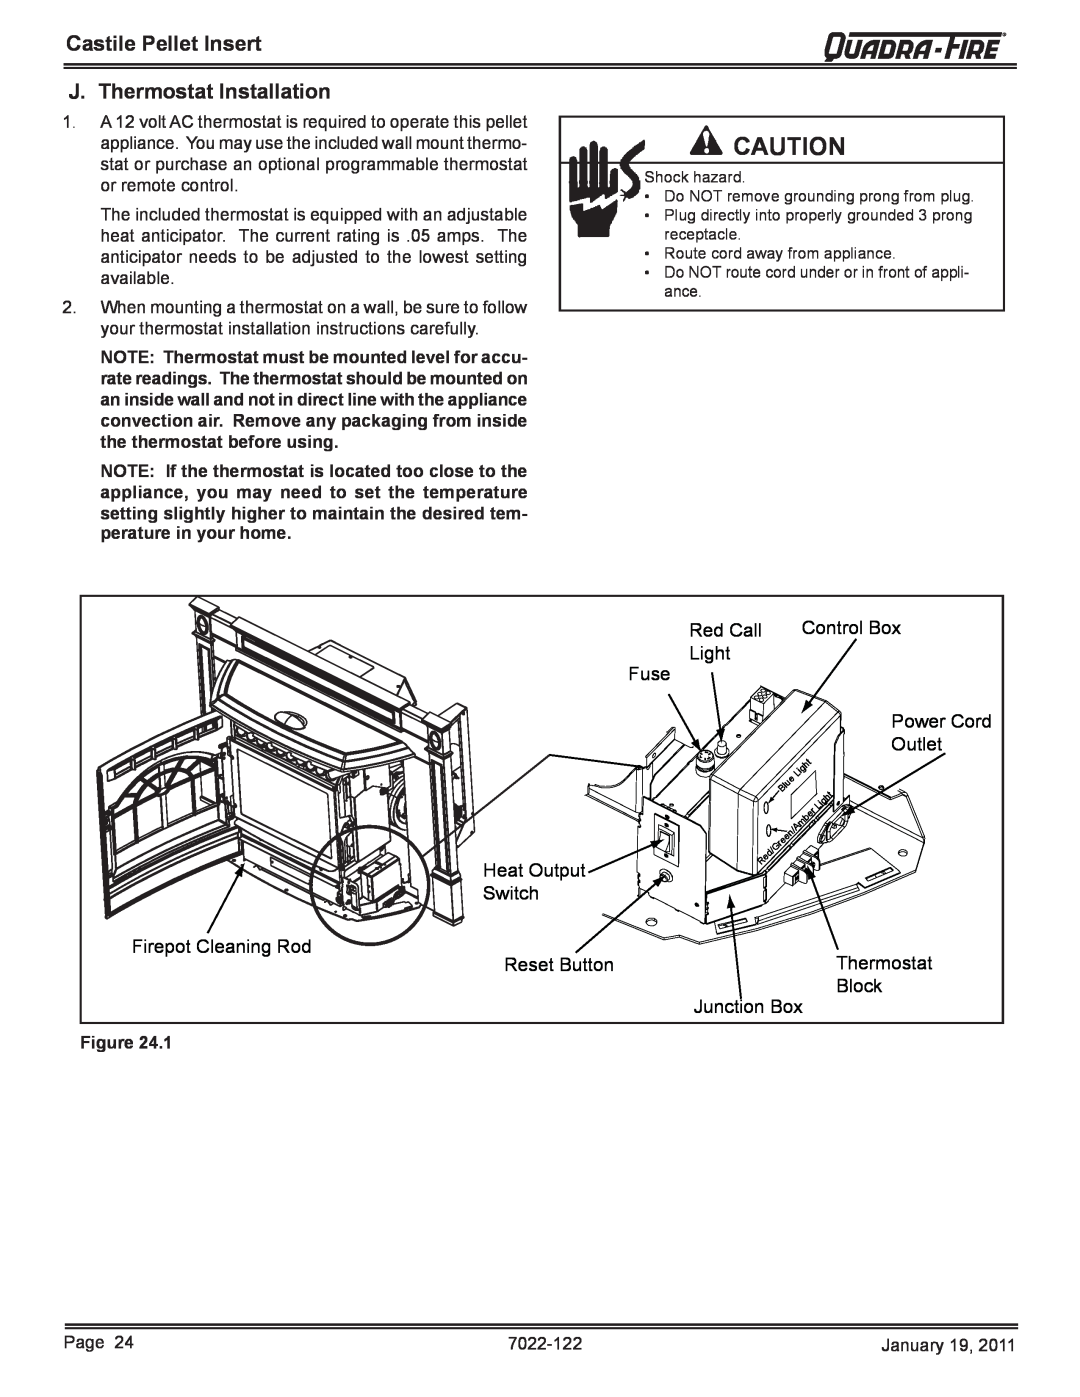 Quadra-Fire CASTILEI-MBK owner manual J. Thermostat Installation, Castile Pellet Insert 